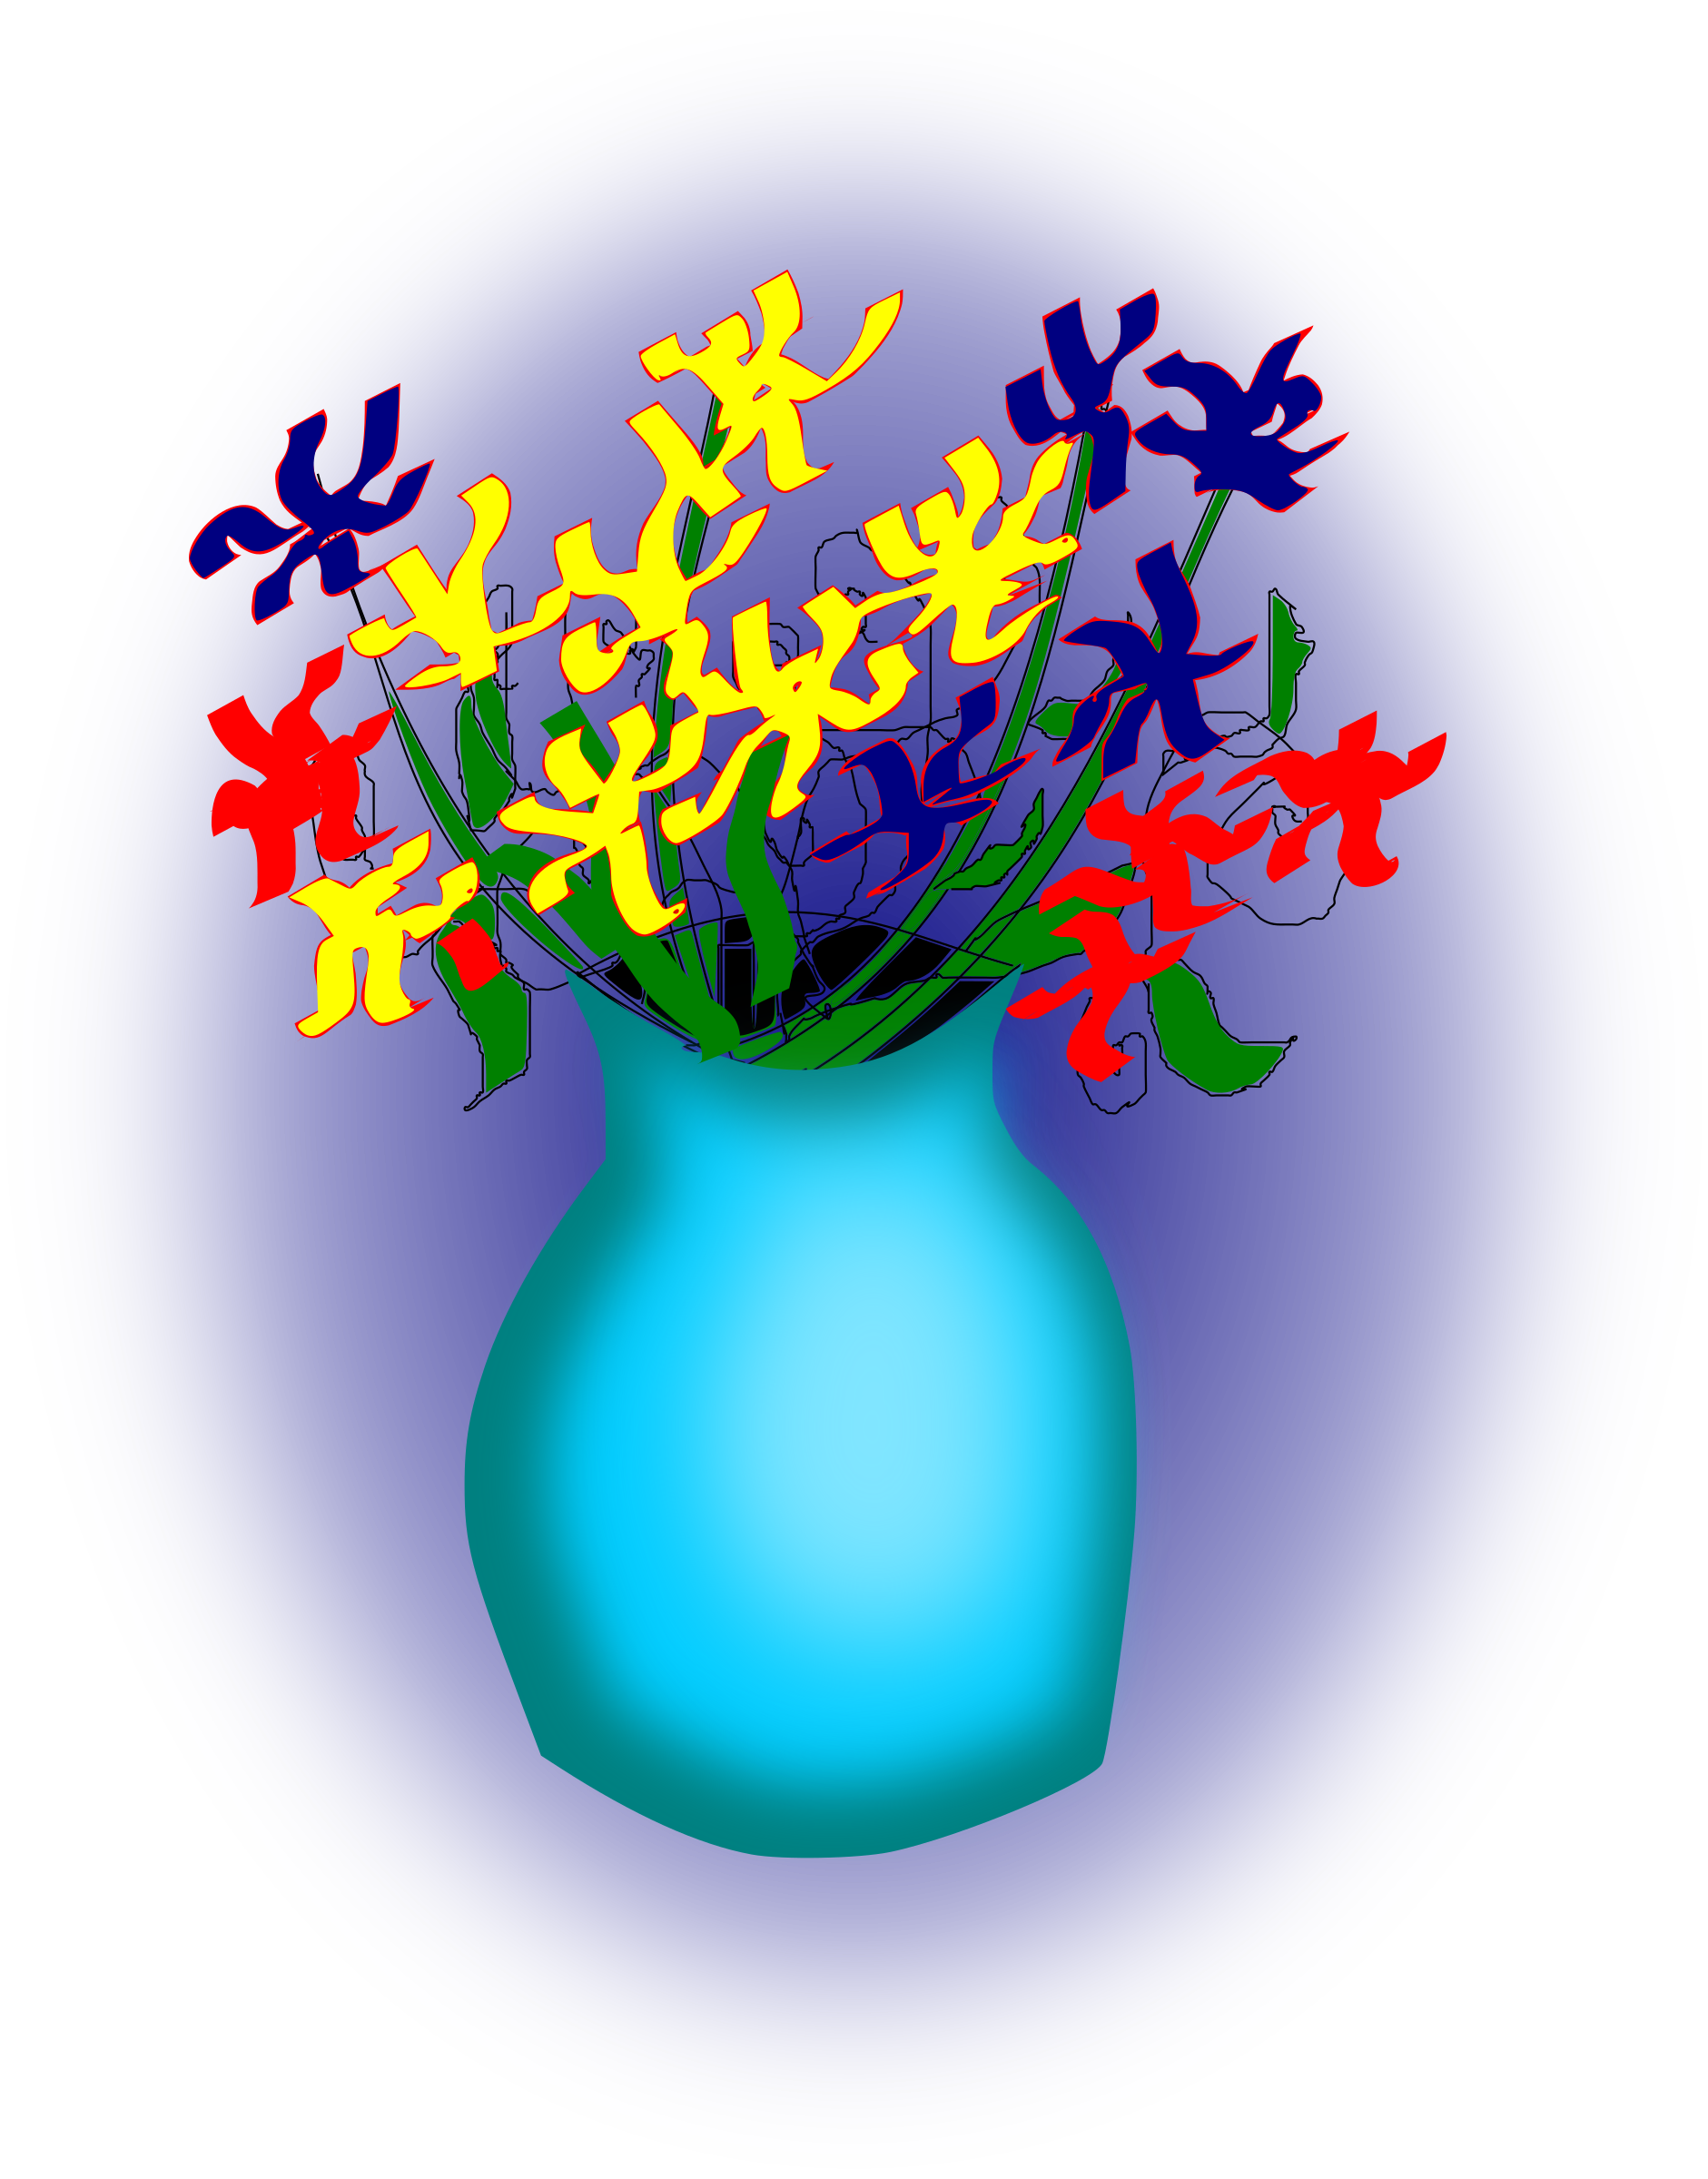 vase clipart florero